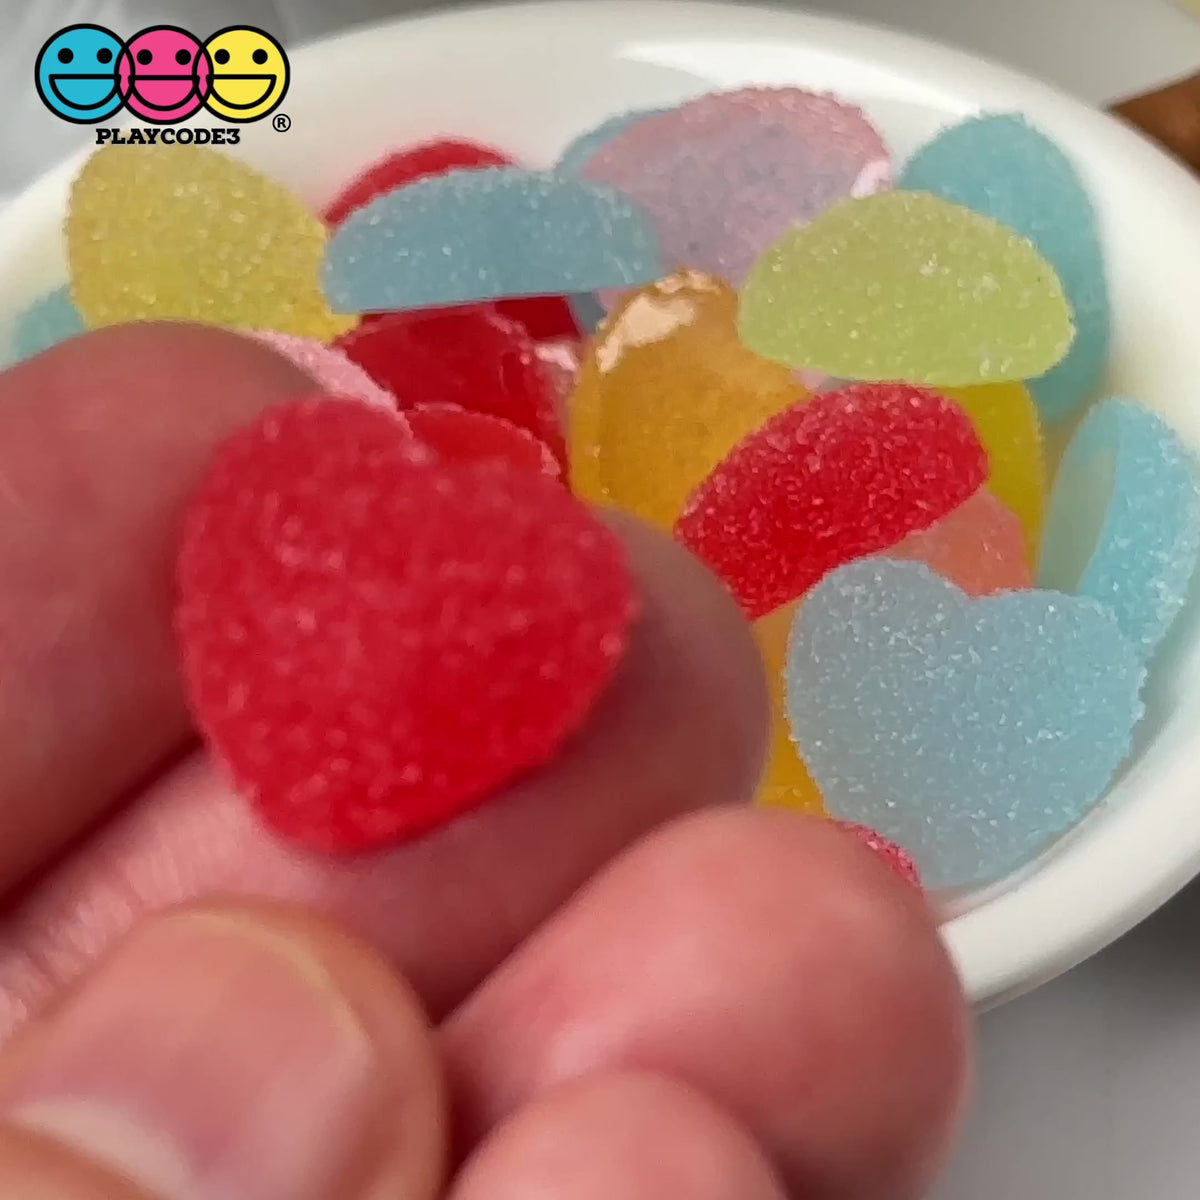 Heart Sugar Candy Cabochon | Fake Food Jewelry DIY | Faux Jelly Candies |  Kawaii Gummy Candy Cabochons (10 pcs by Random / 17mm x 16mm)